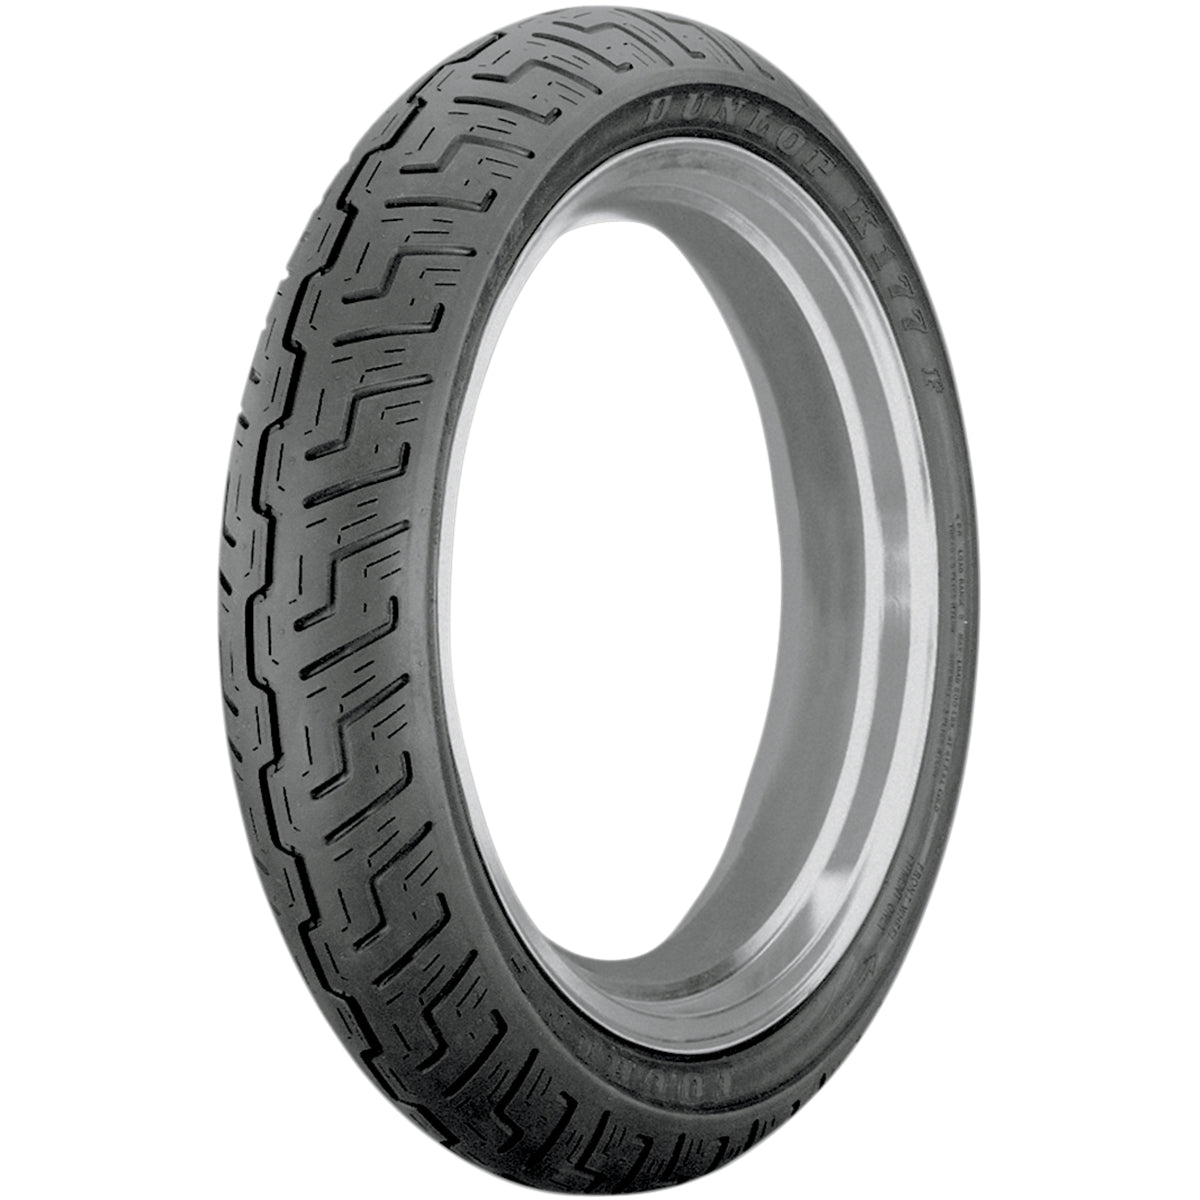 Dunlop K177 OE 18" Front Street Tires-4061